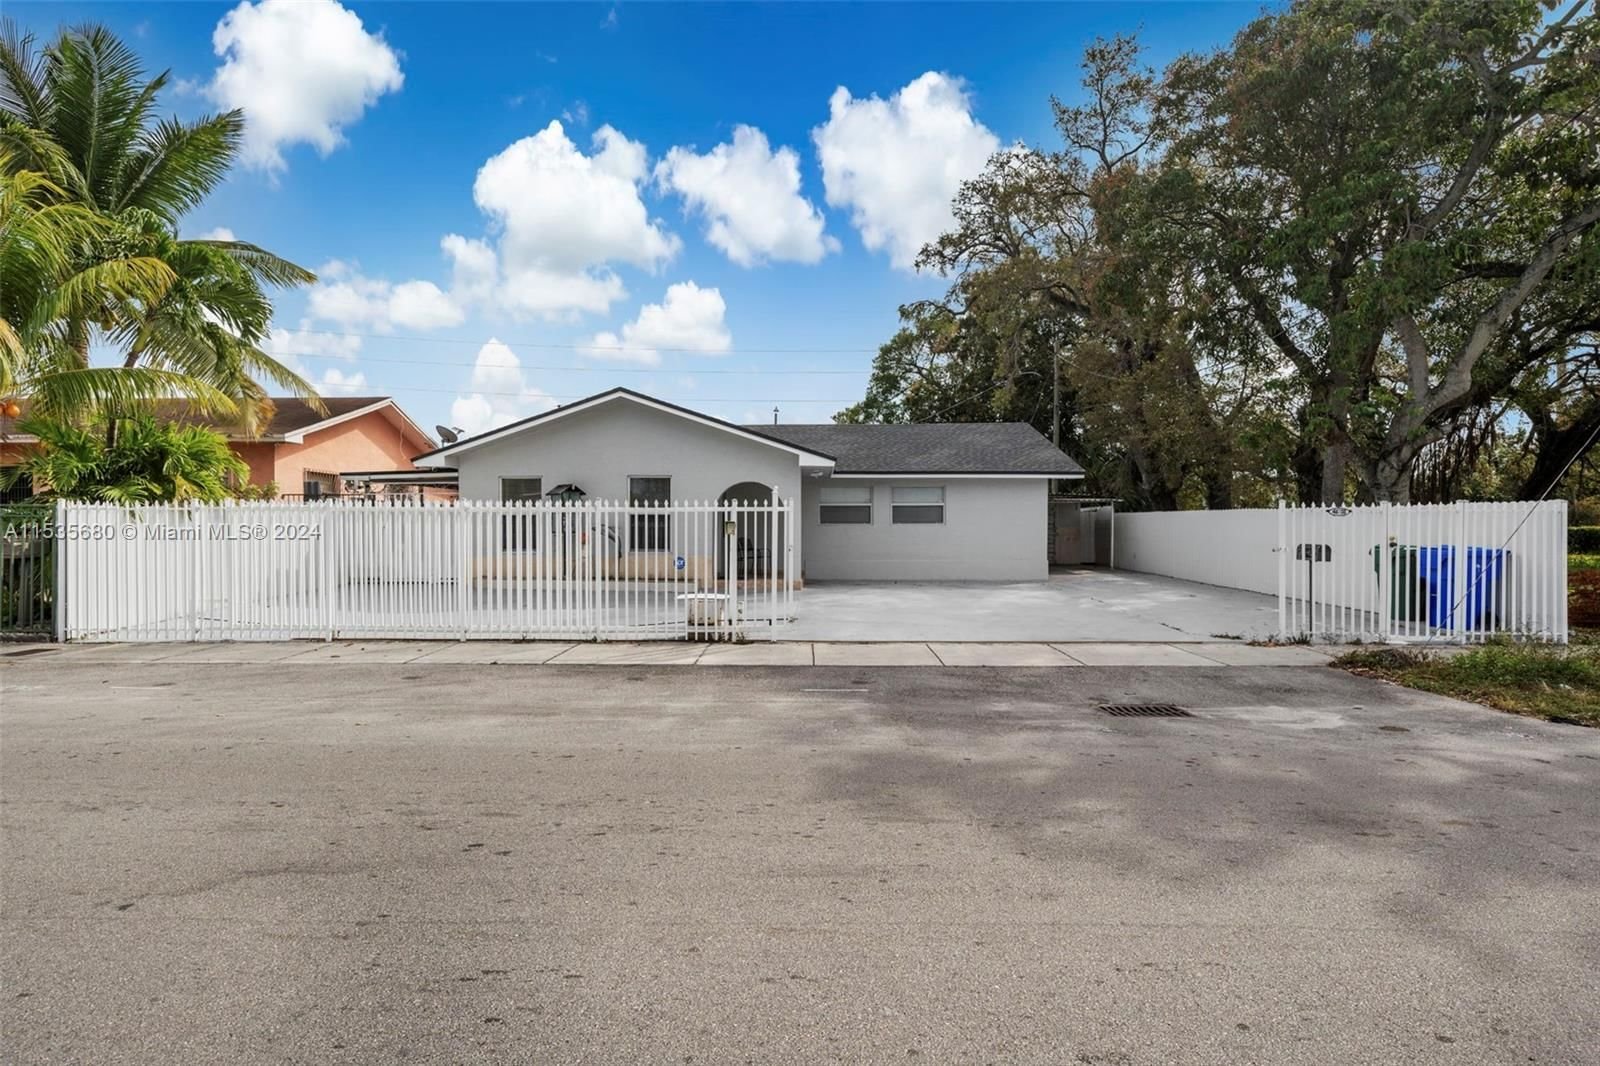 Real estate property located at 4500 4th St, Miami-Dade County, NEW LIFE SUB, Miami, FL